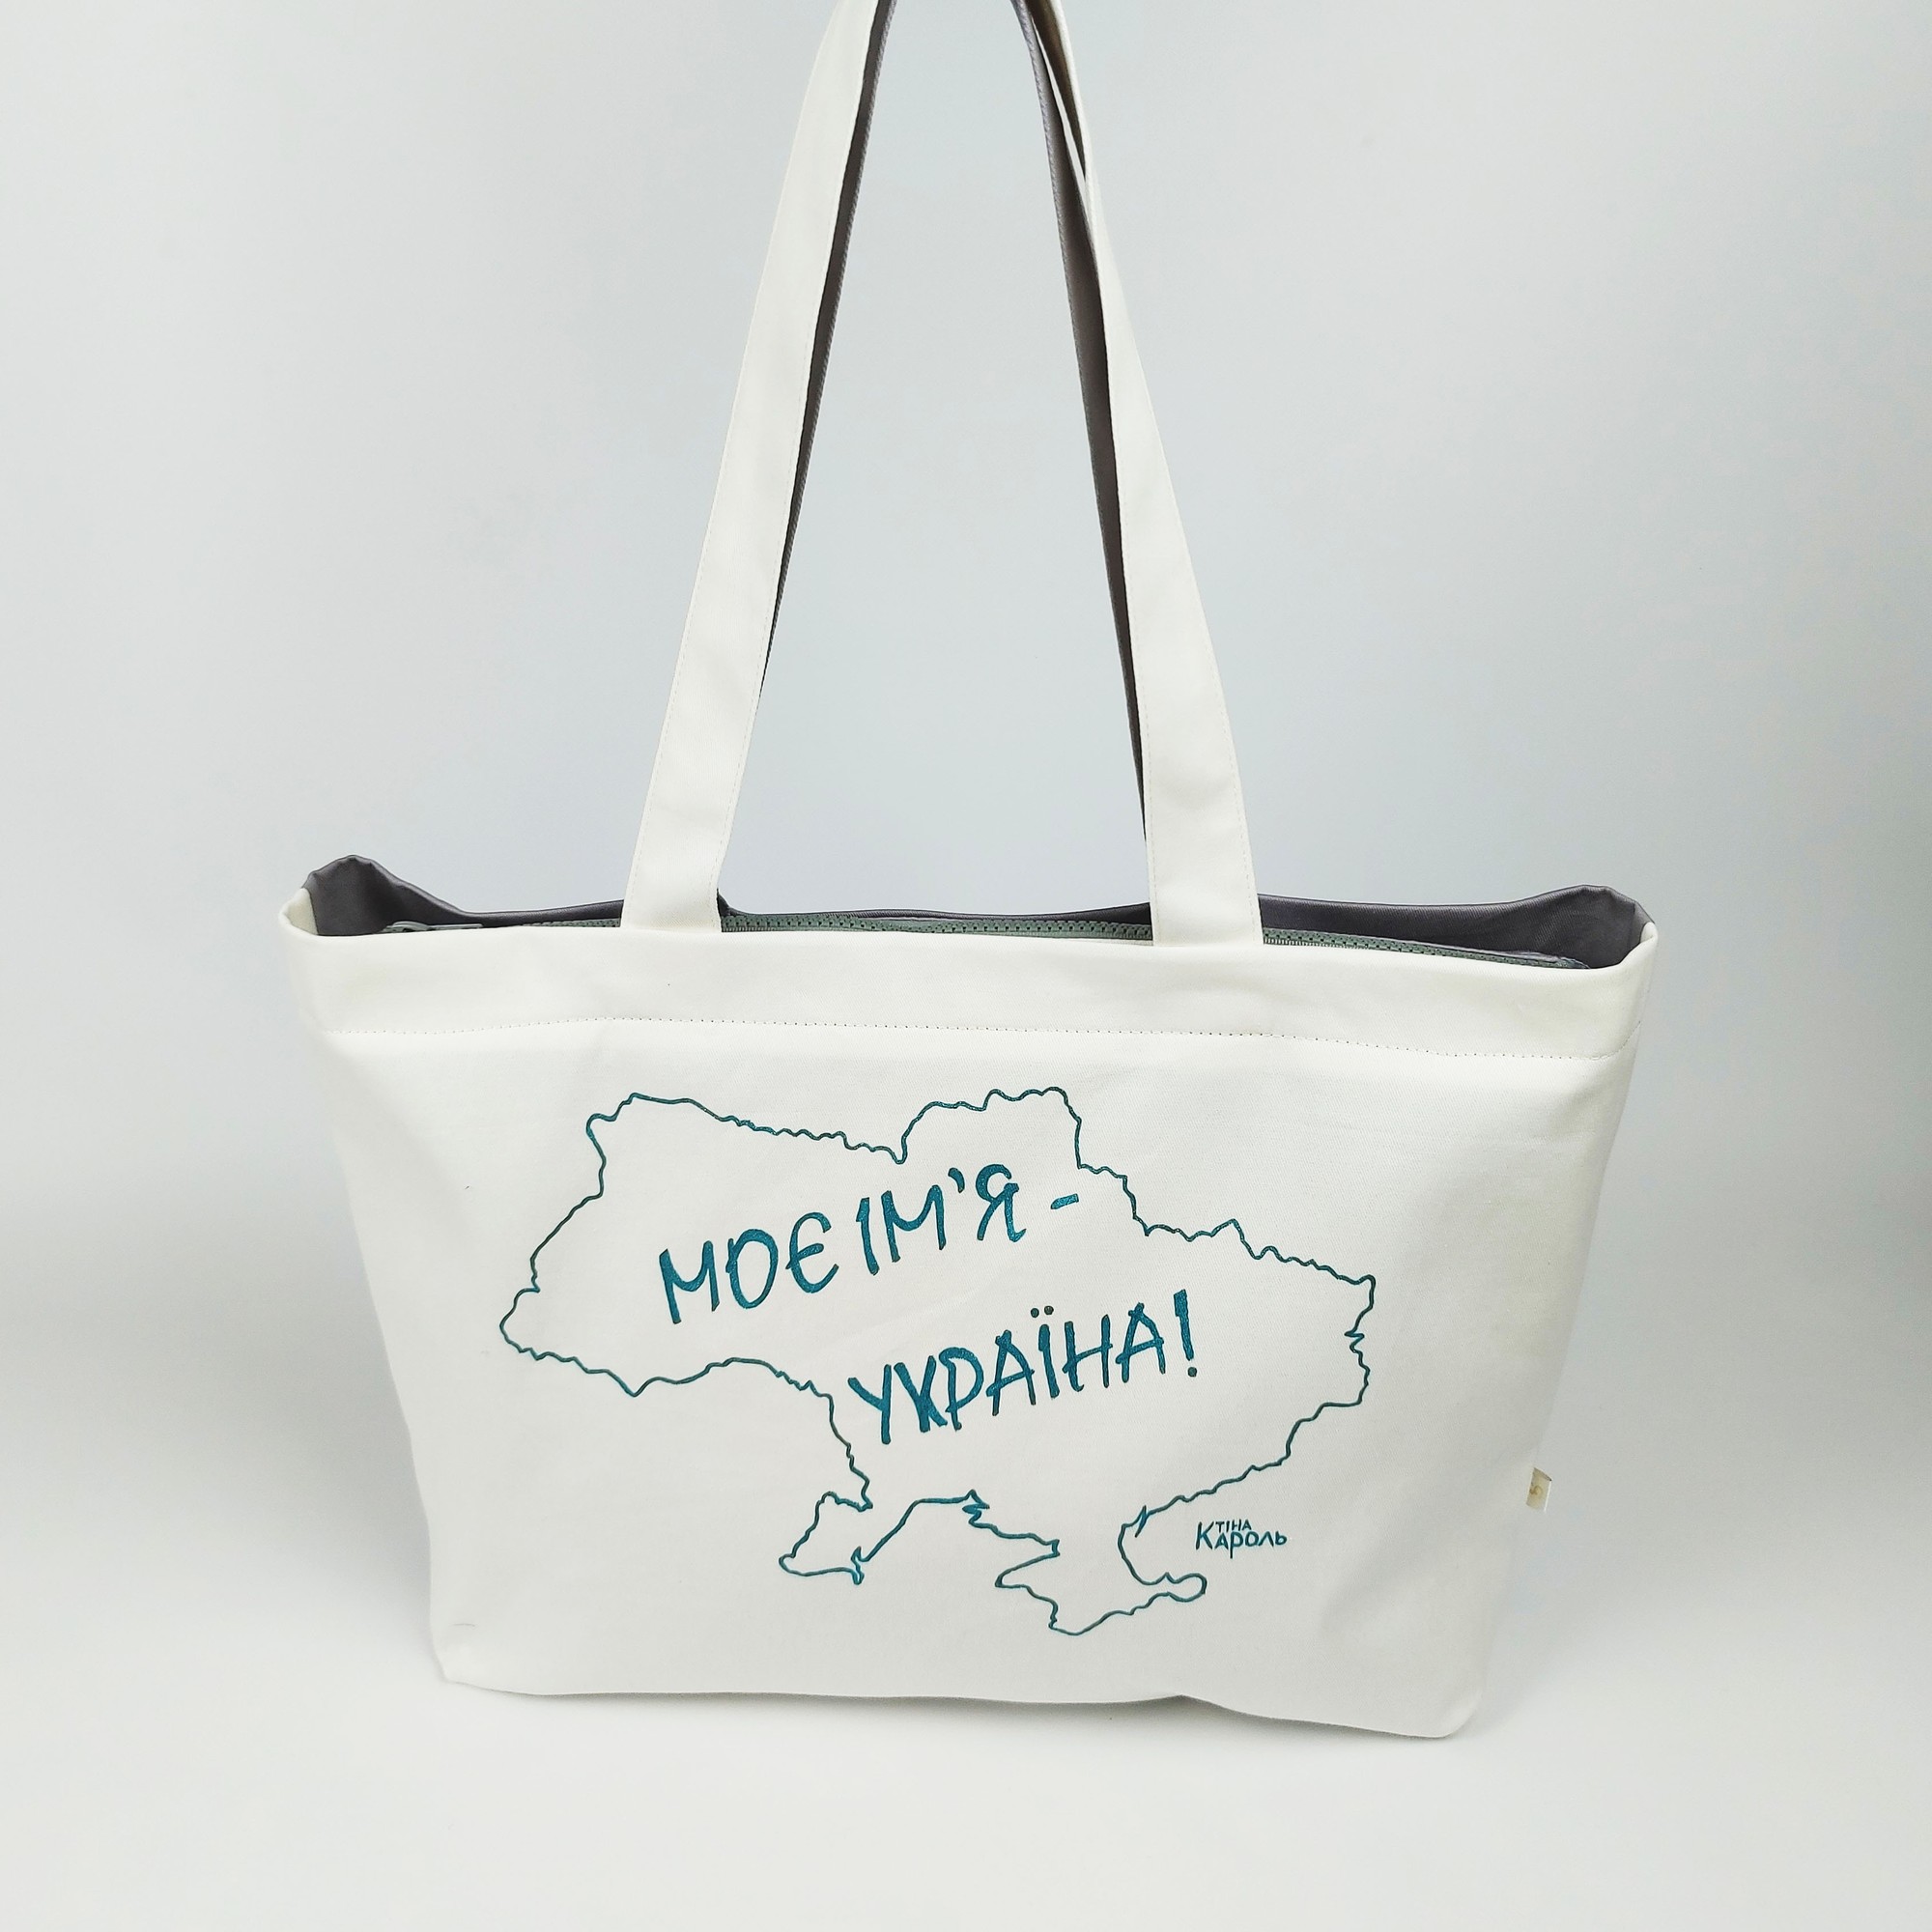 Ukrainian-Style handmade textile tote bag - My name is Ukraine